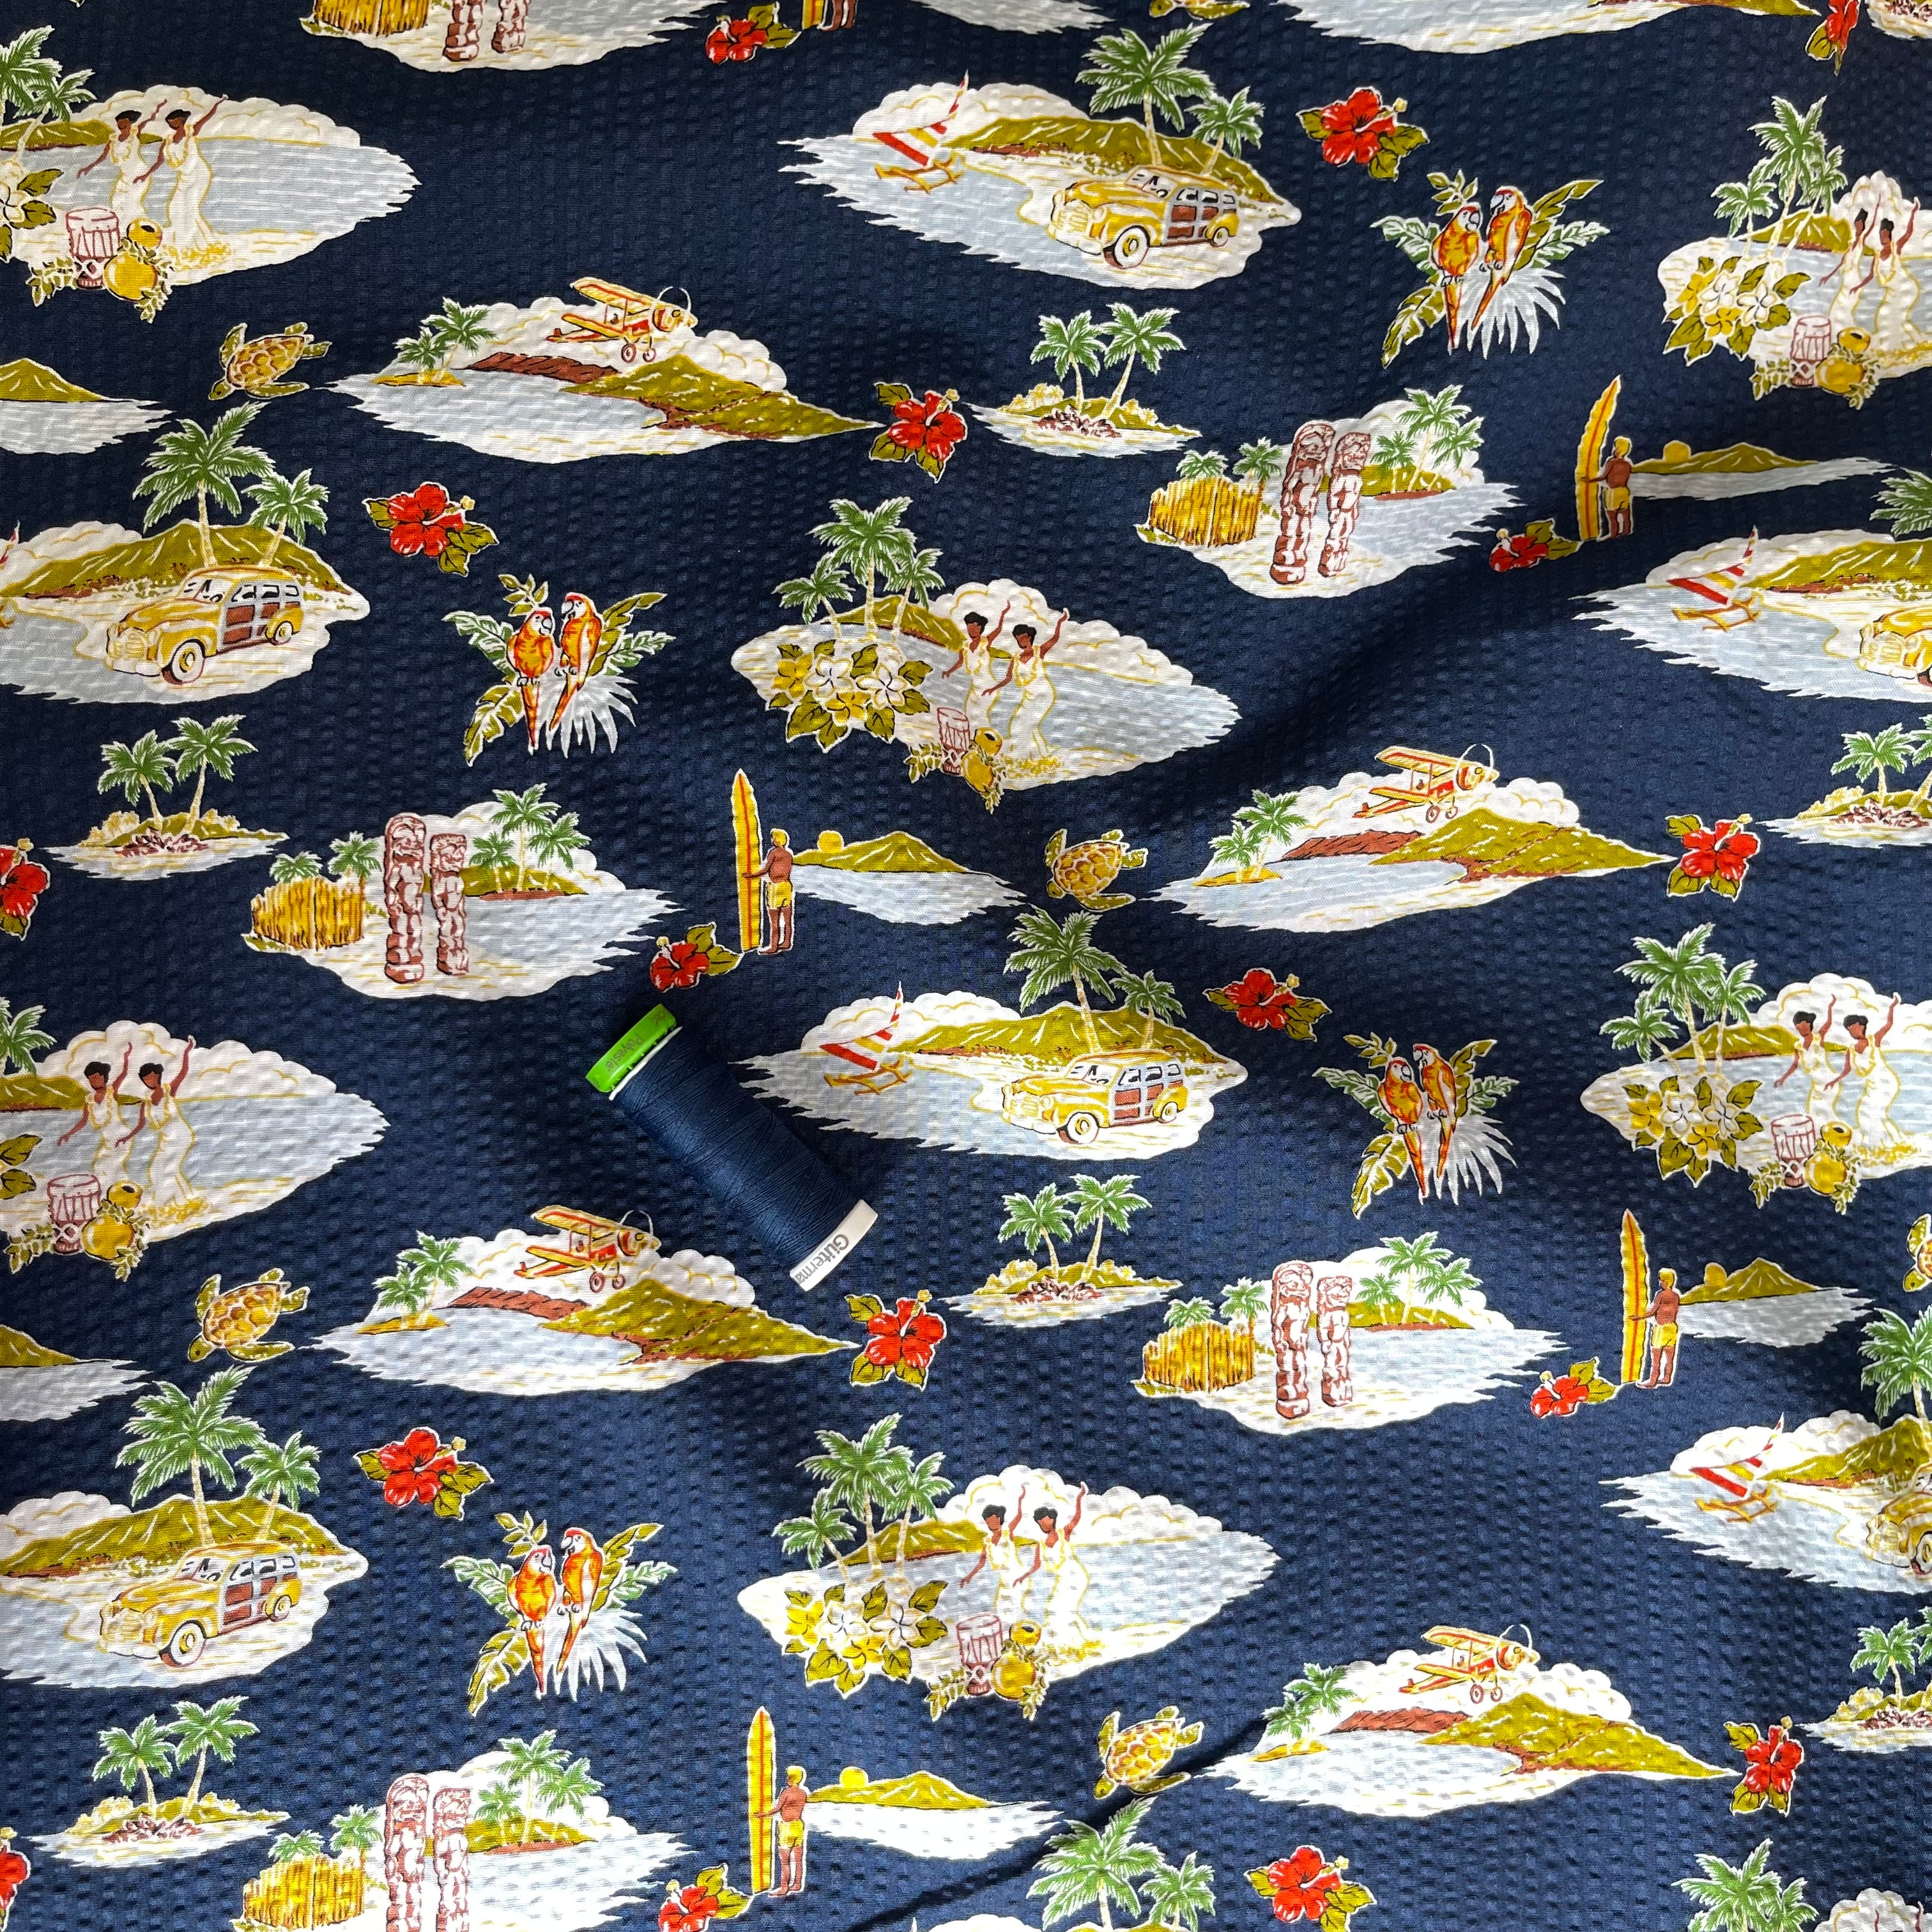 Paradise Islands on Navy Cotton Seersucker Fabric